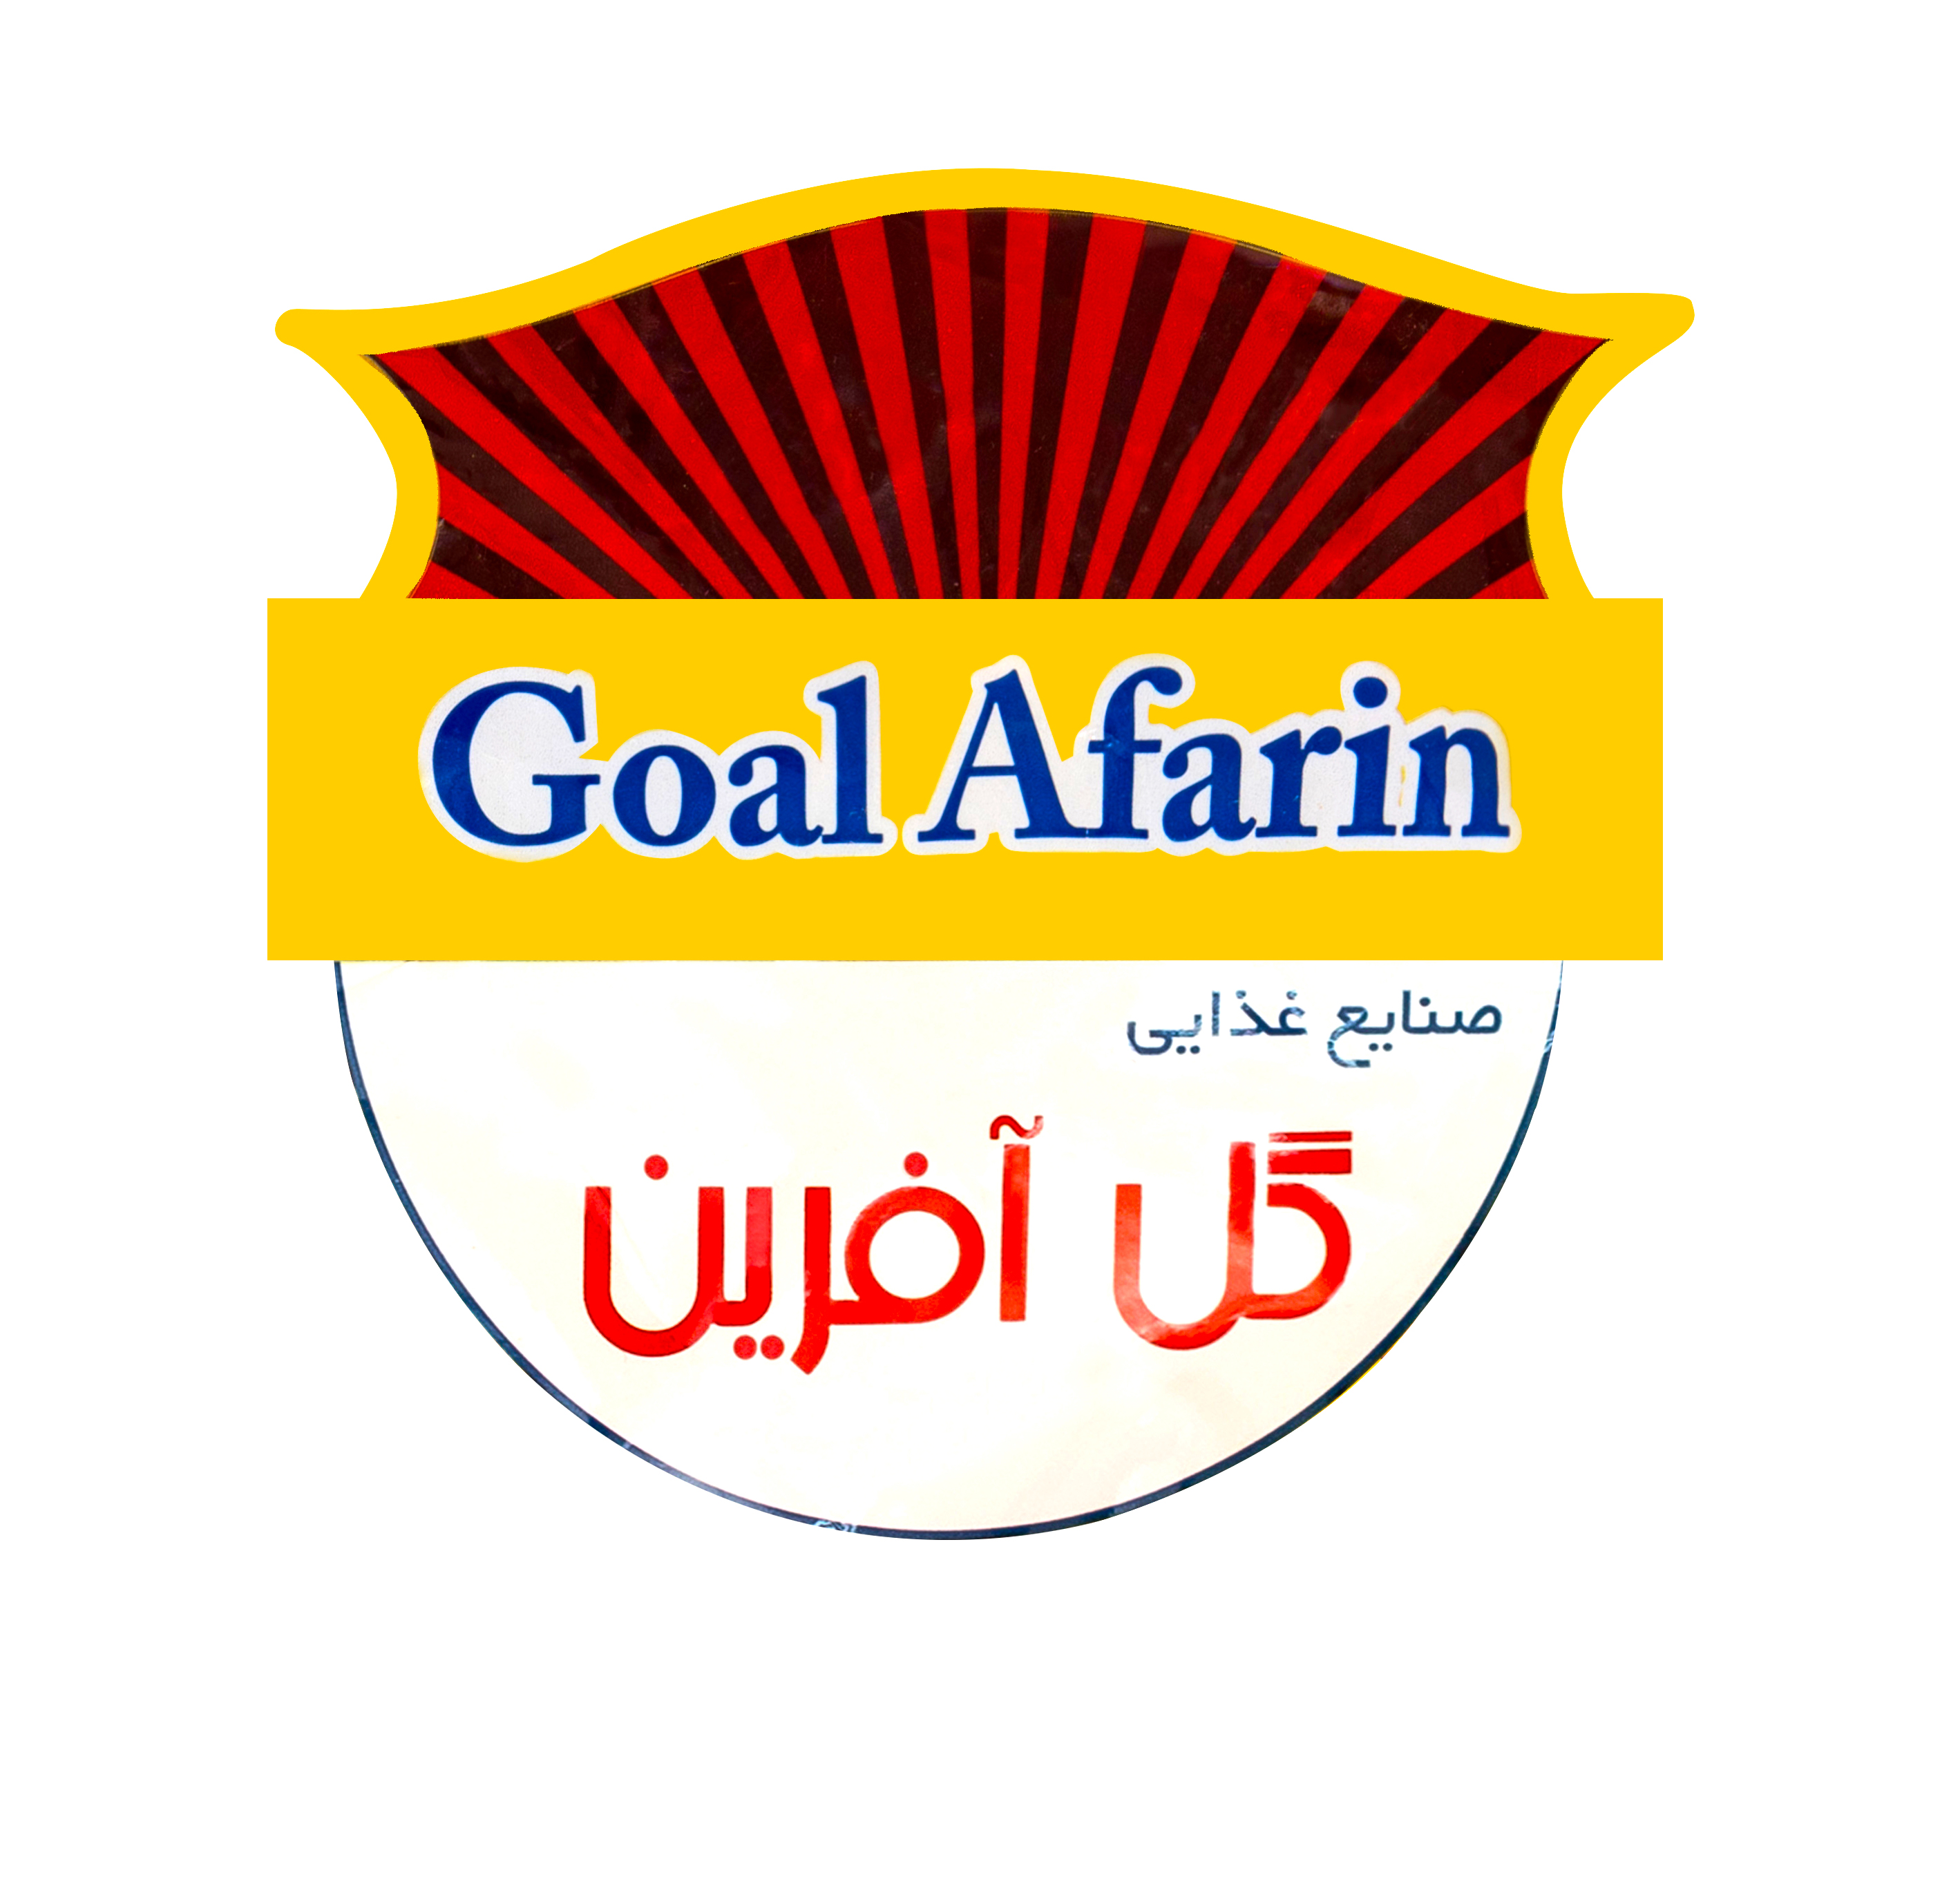 Goal Afarin